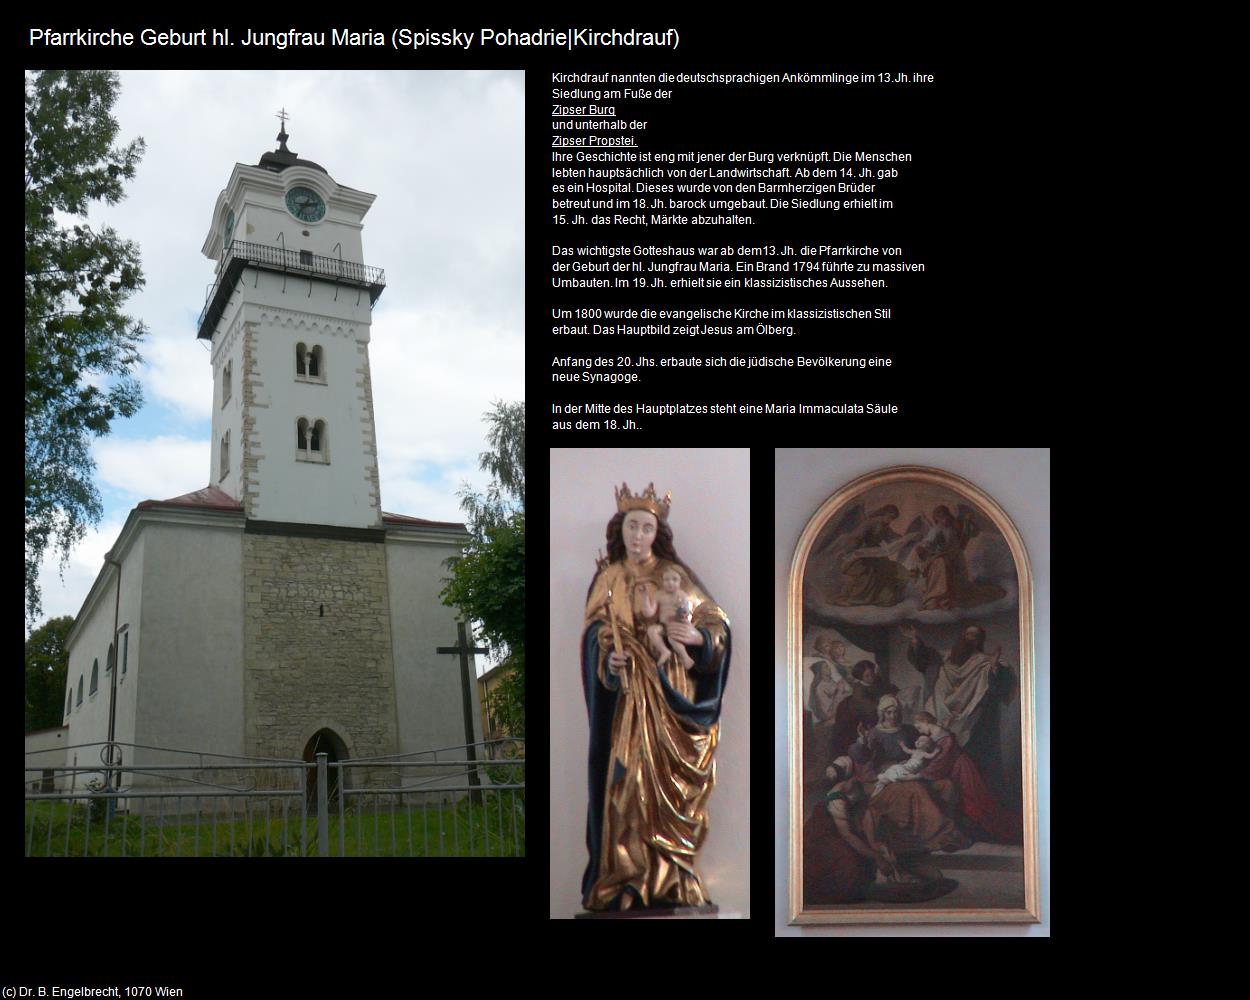 Pfk. Geburt hl. Jungfrau Maria (Spissky Pohadrie|Kirchdrauf) in SLOWAKEI(c)B.Engelbrecht